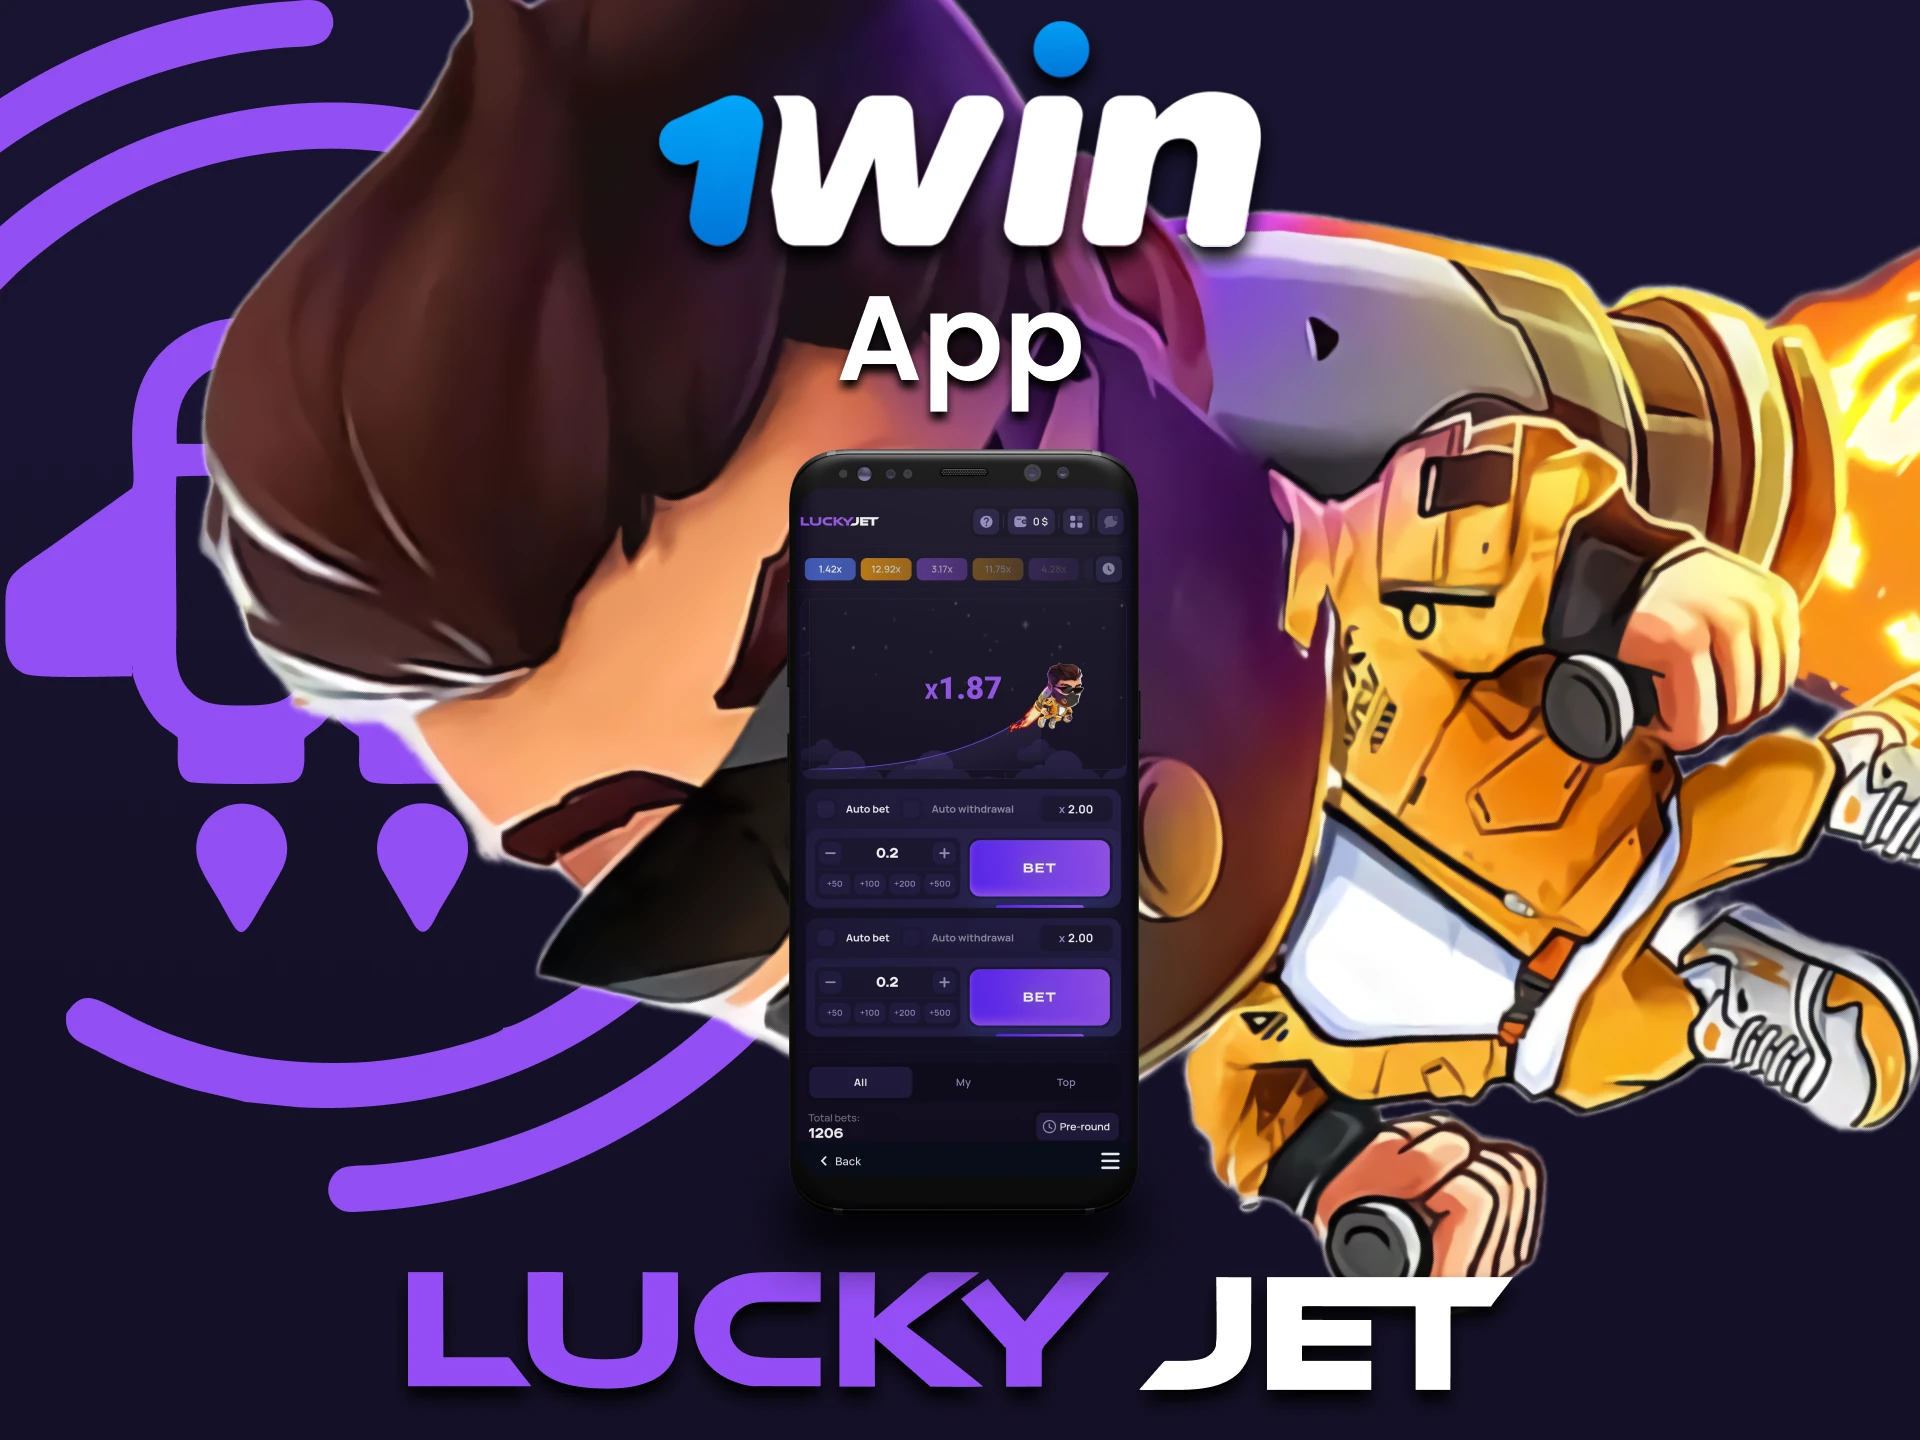 Play Lucky Jet through the 1win app.